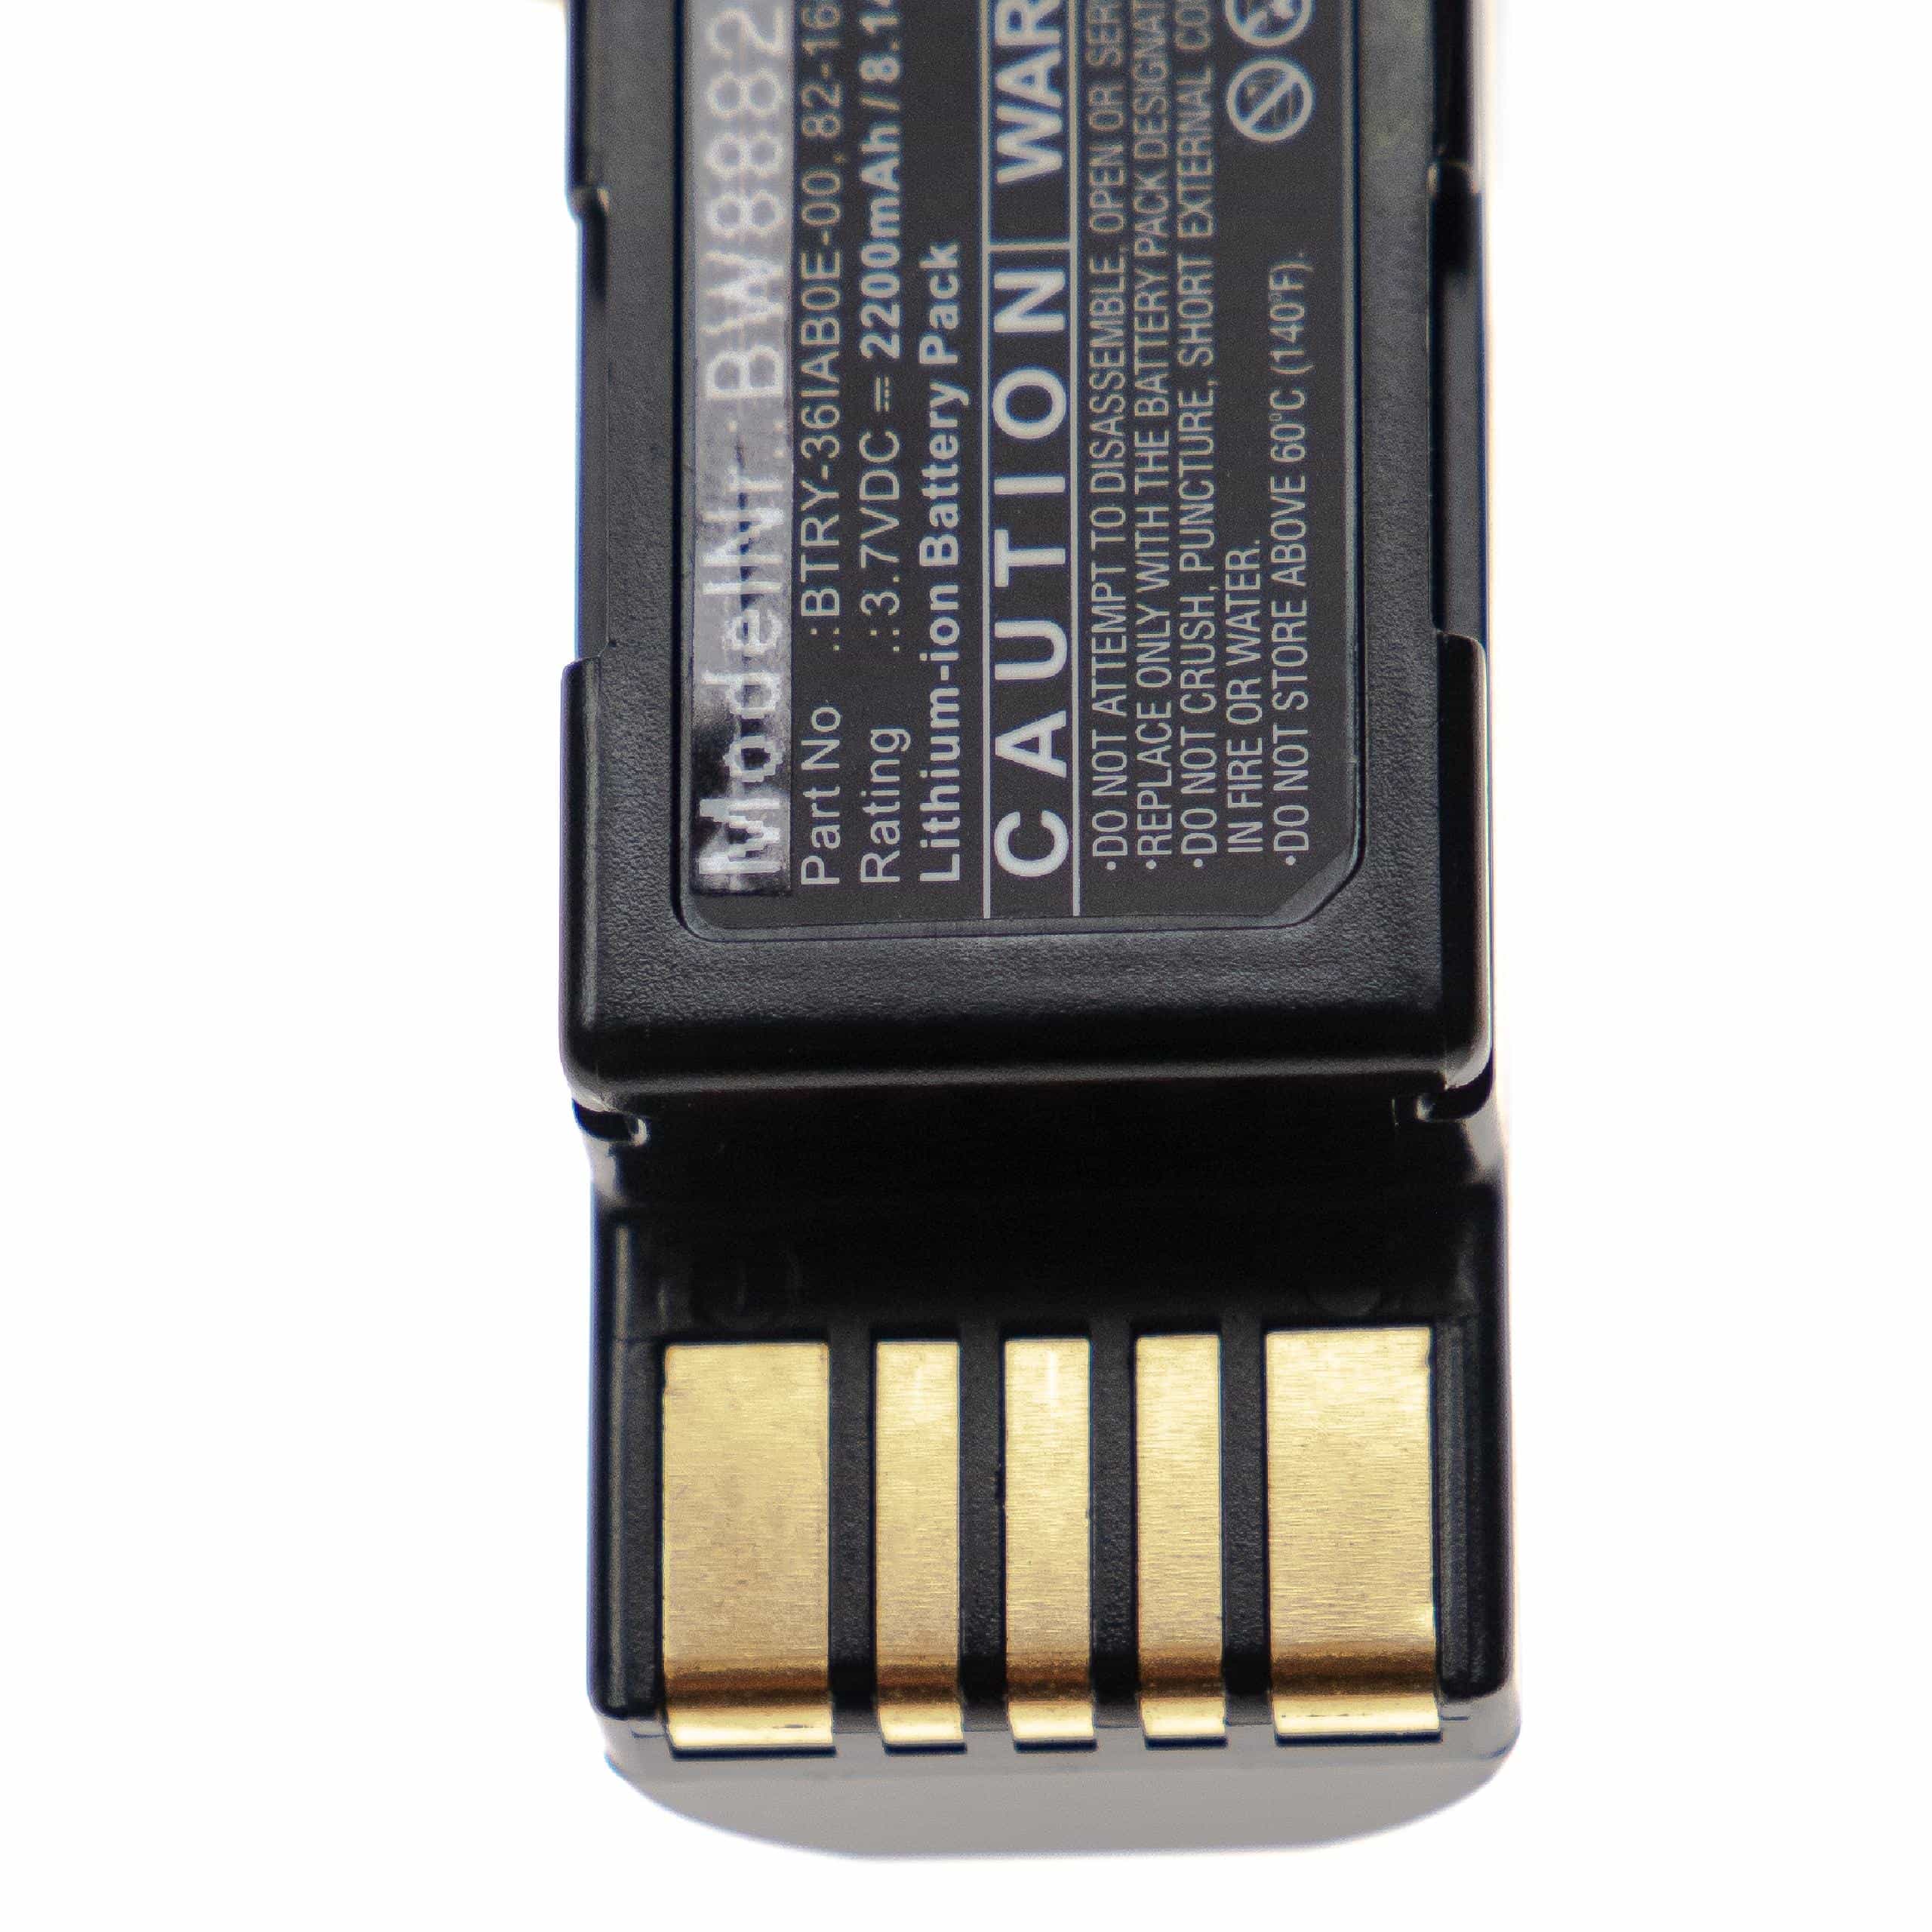 Barcode Scanner POS Battery Replacement for Zebra BTRY-36IAB0E-00, 82-166537-01 - 2200mAh 3.7V Li-Ion